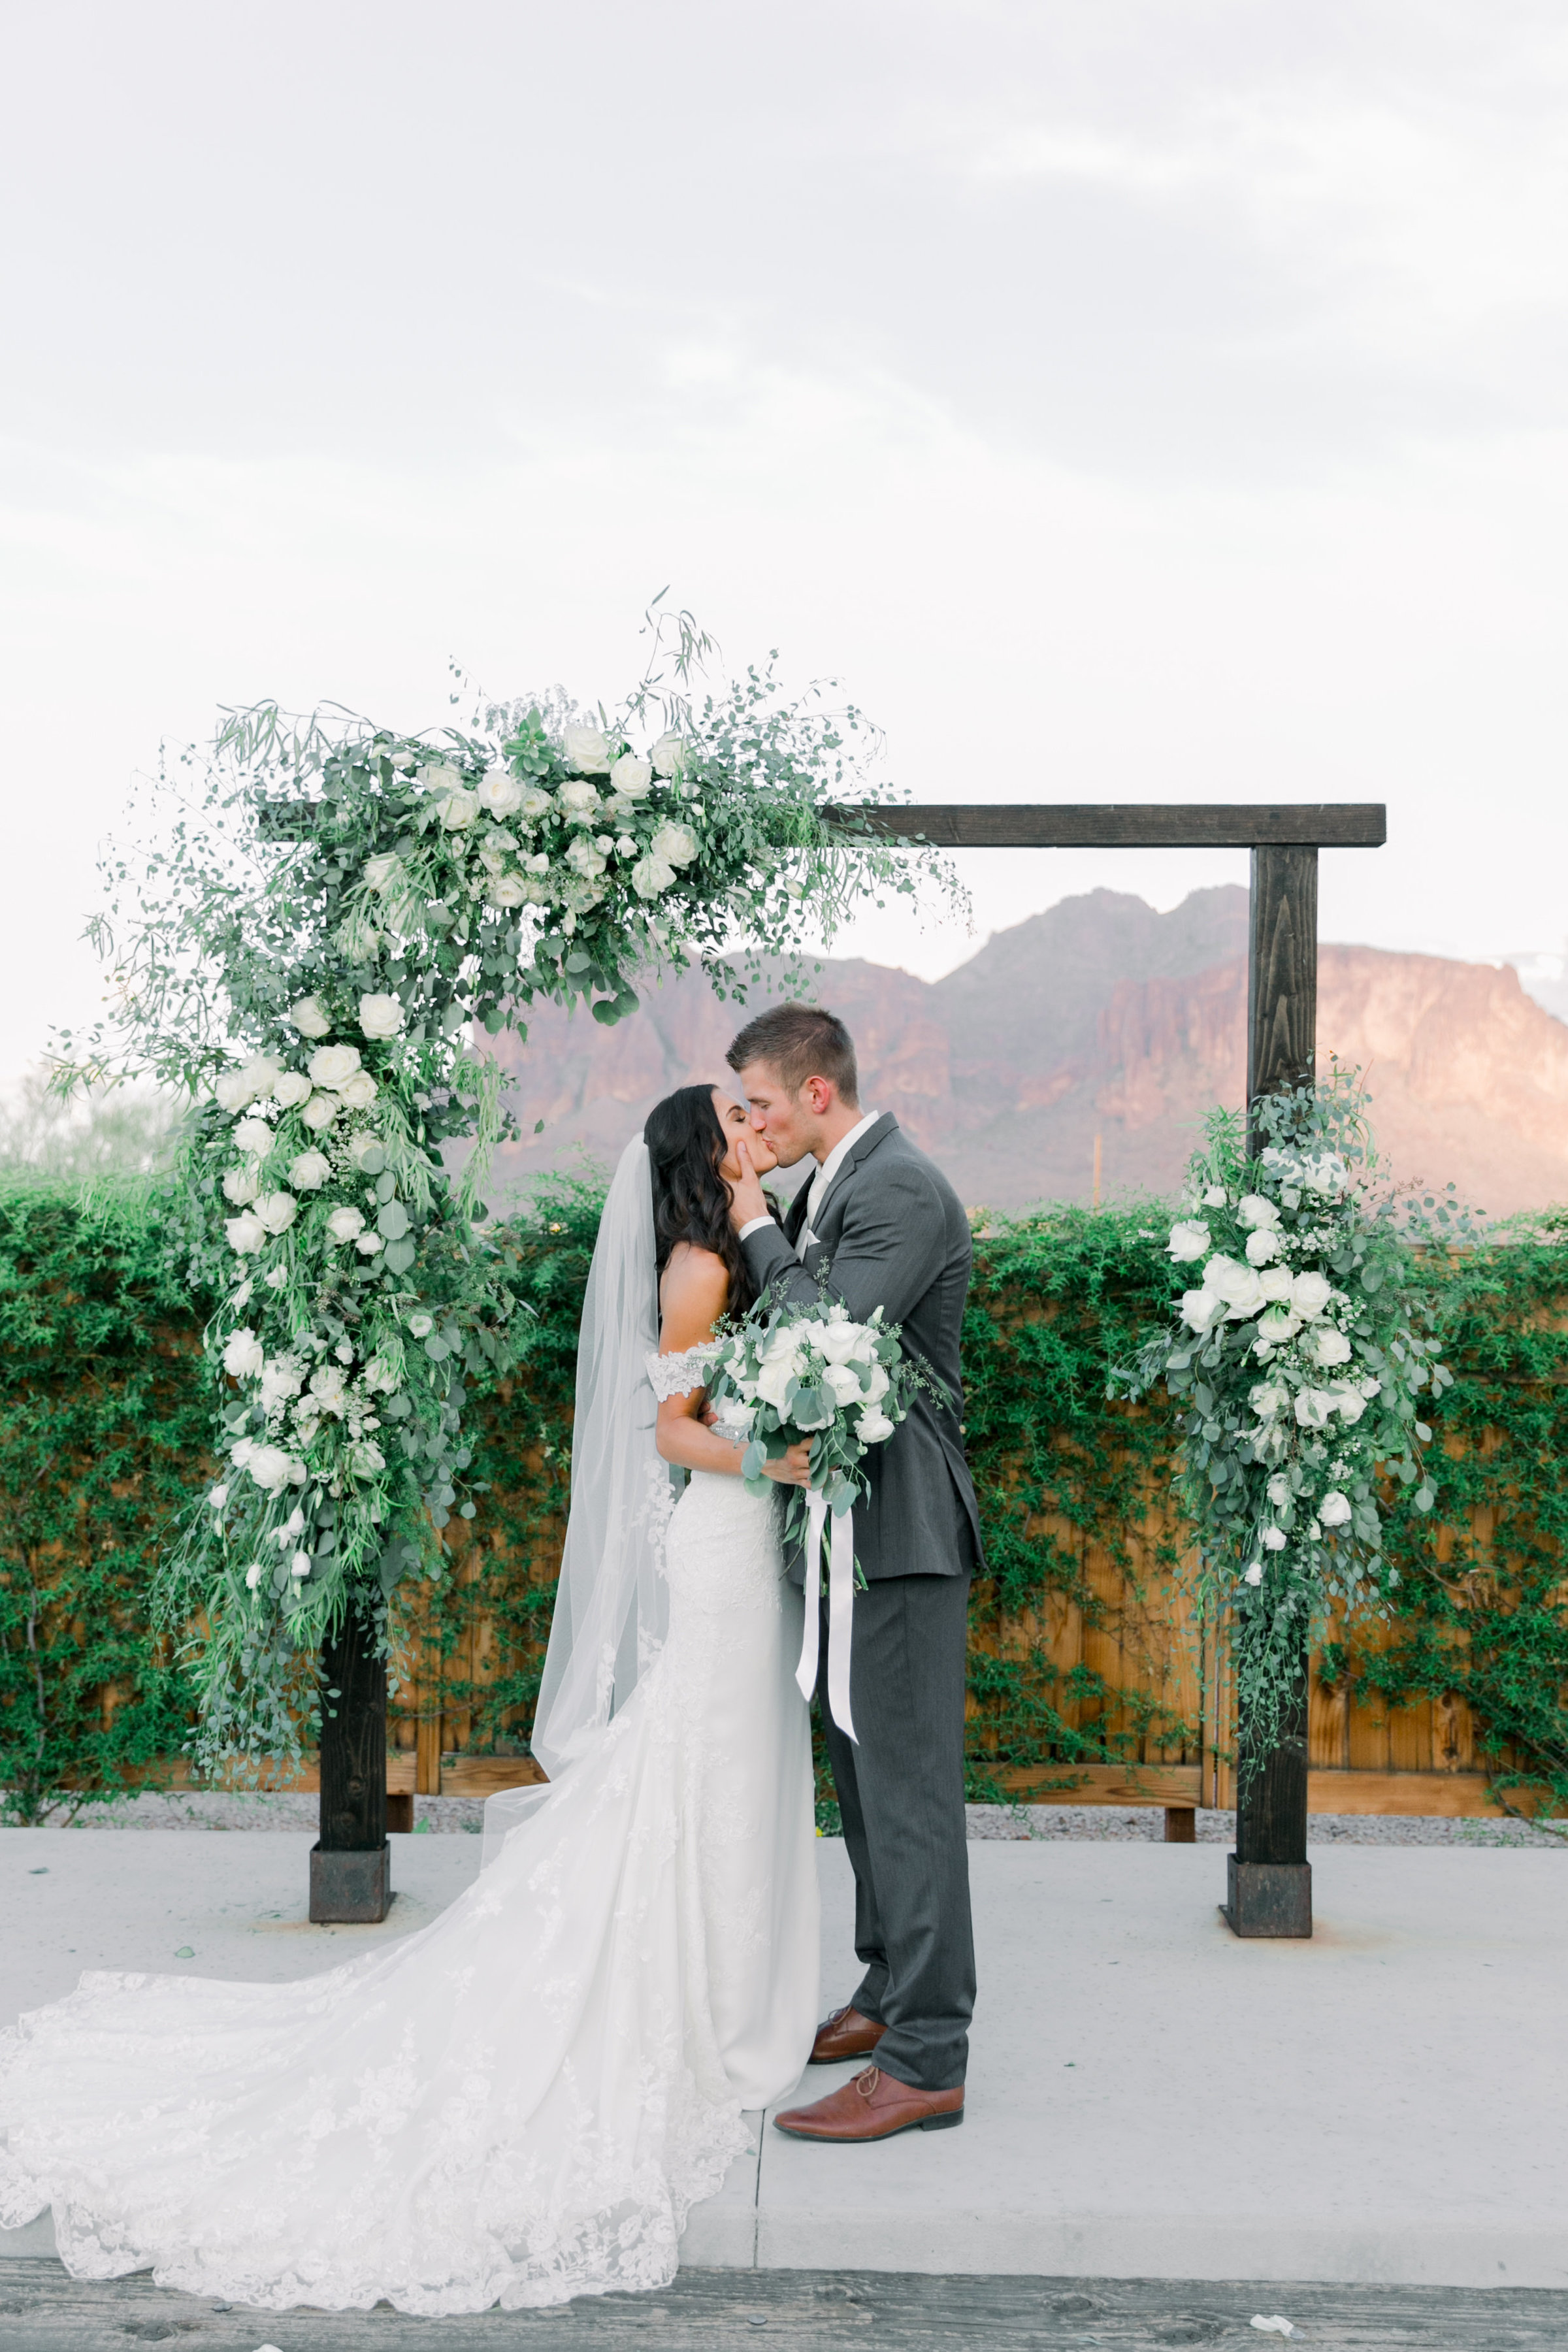 Karlie Colleen Photography - The Paseo Venue - Arizona Wedding - Jackie & Ryan-13